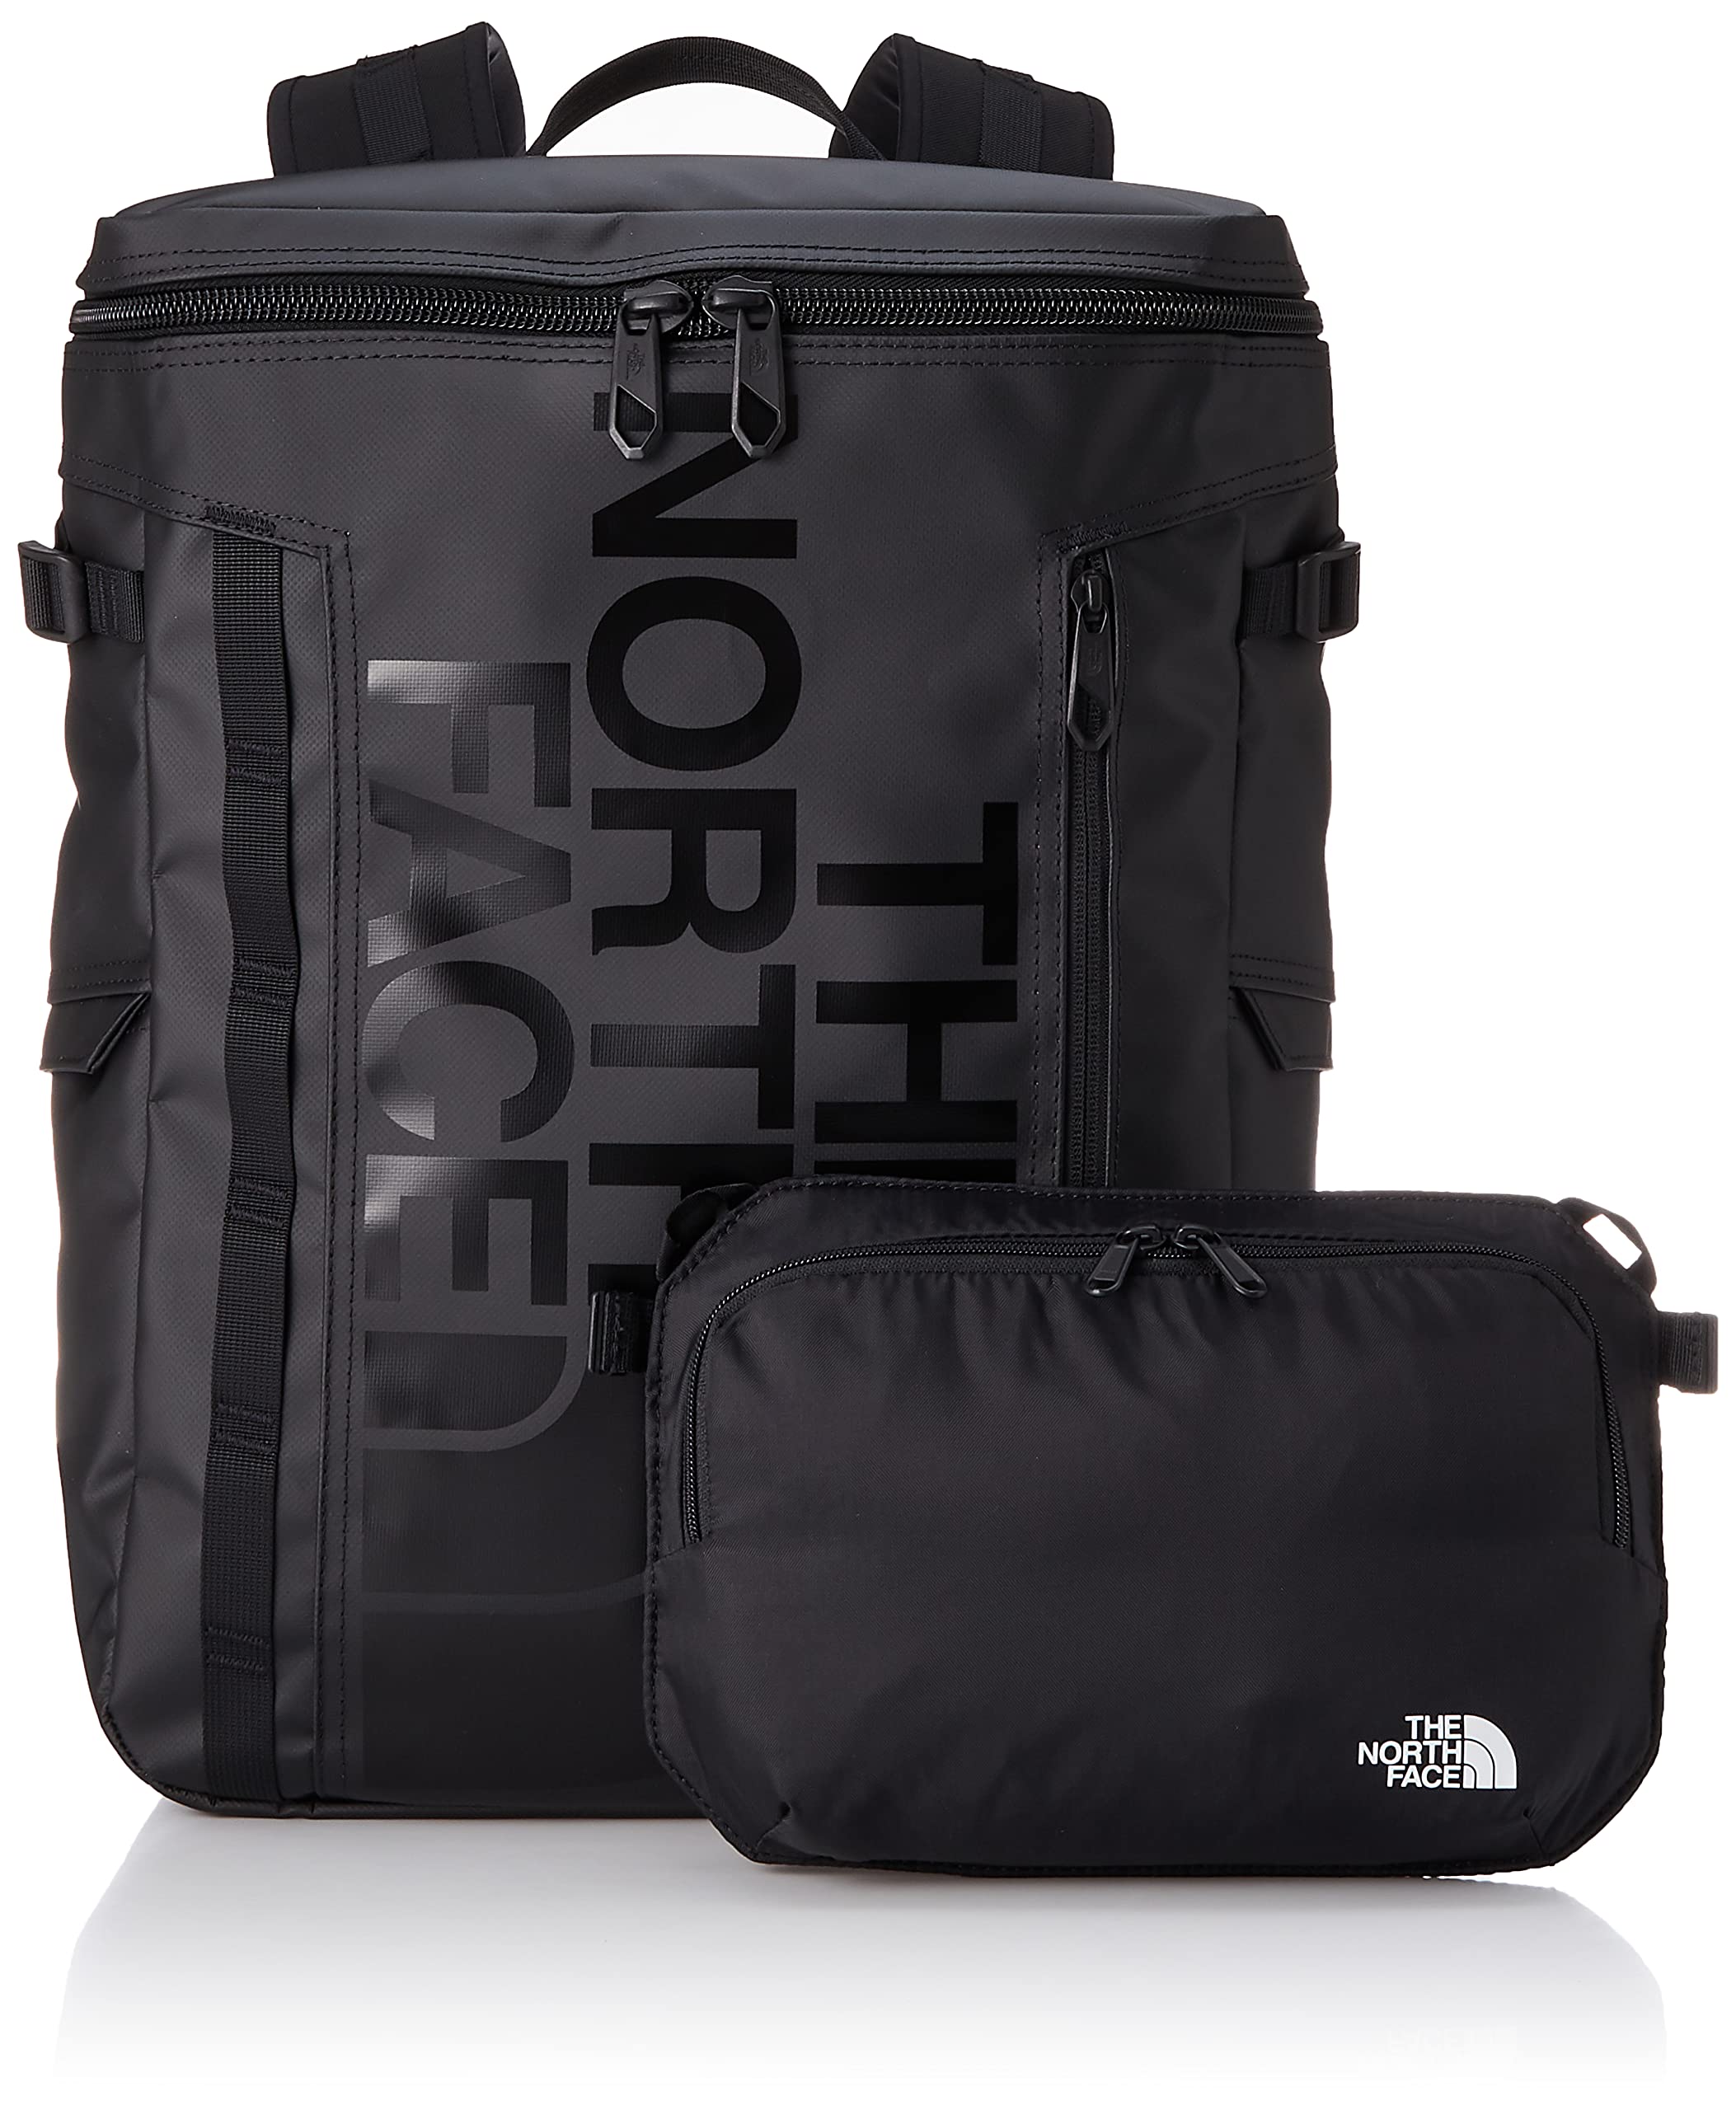 The North Face NM82255 BC Fuse Box II Backpack / Bag, black (black 19-3911tcx), Free Size